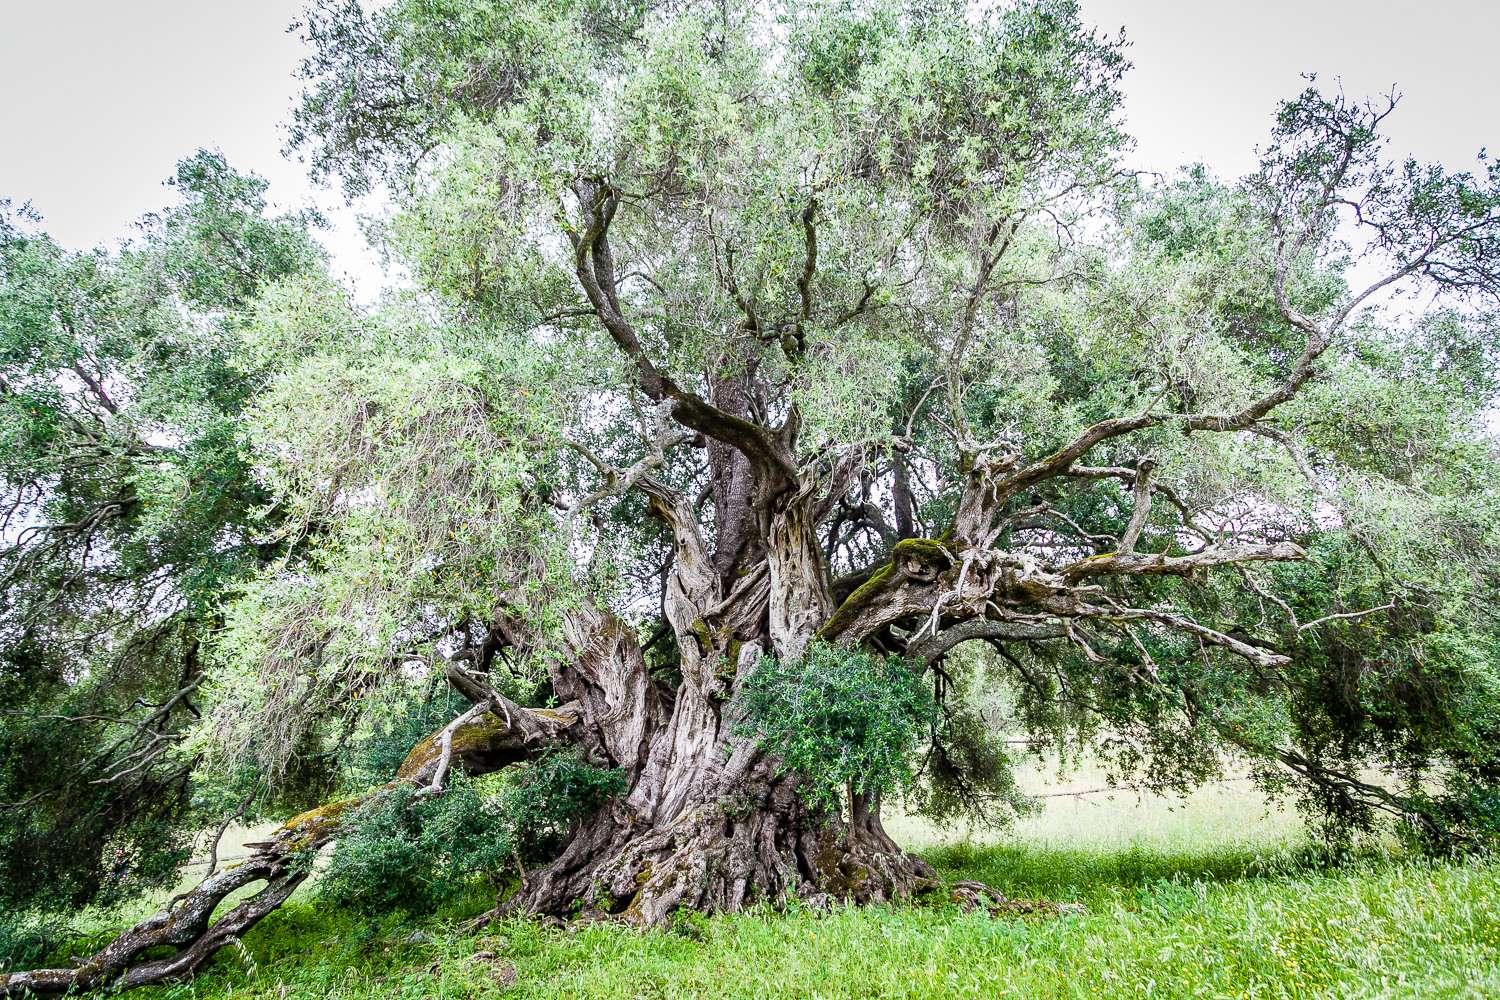 Olivastri Millenari Olive Tree Between 3,000 - 4,000 Years Old